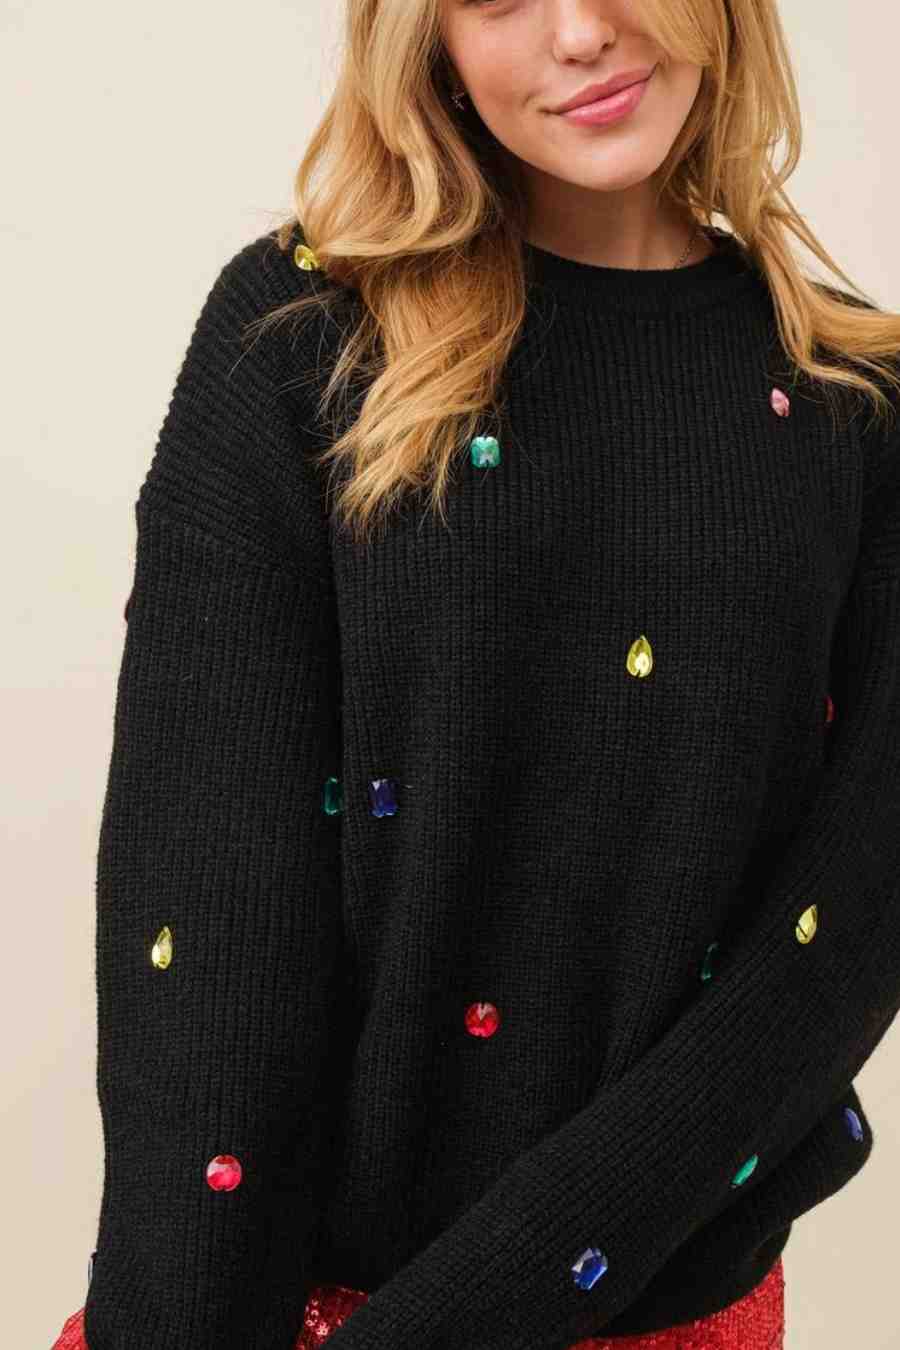 Bejeweled Rhinestone Colorful Sweater